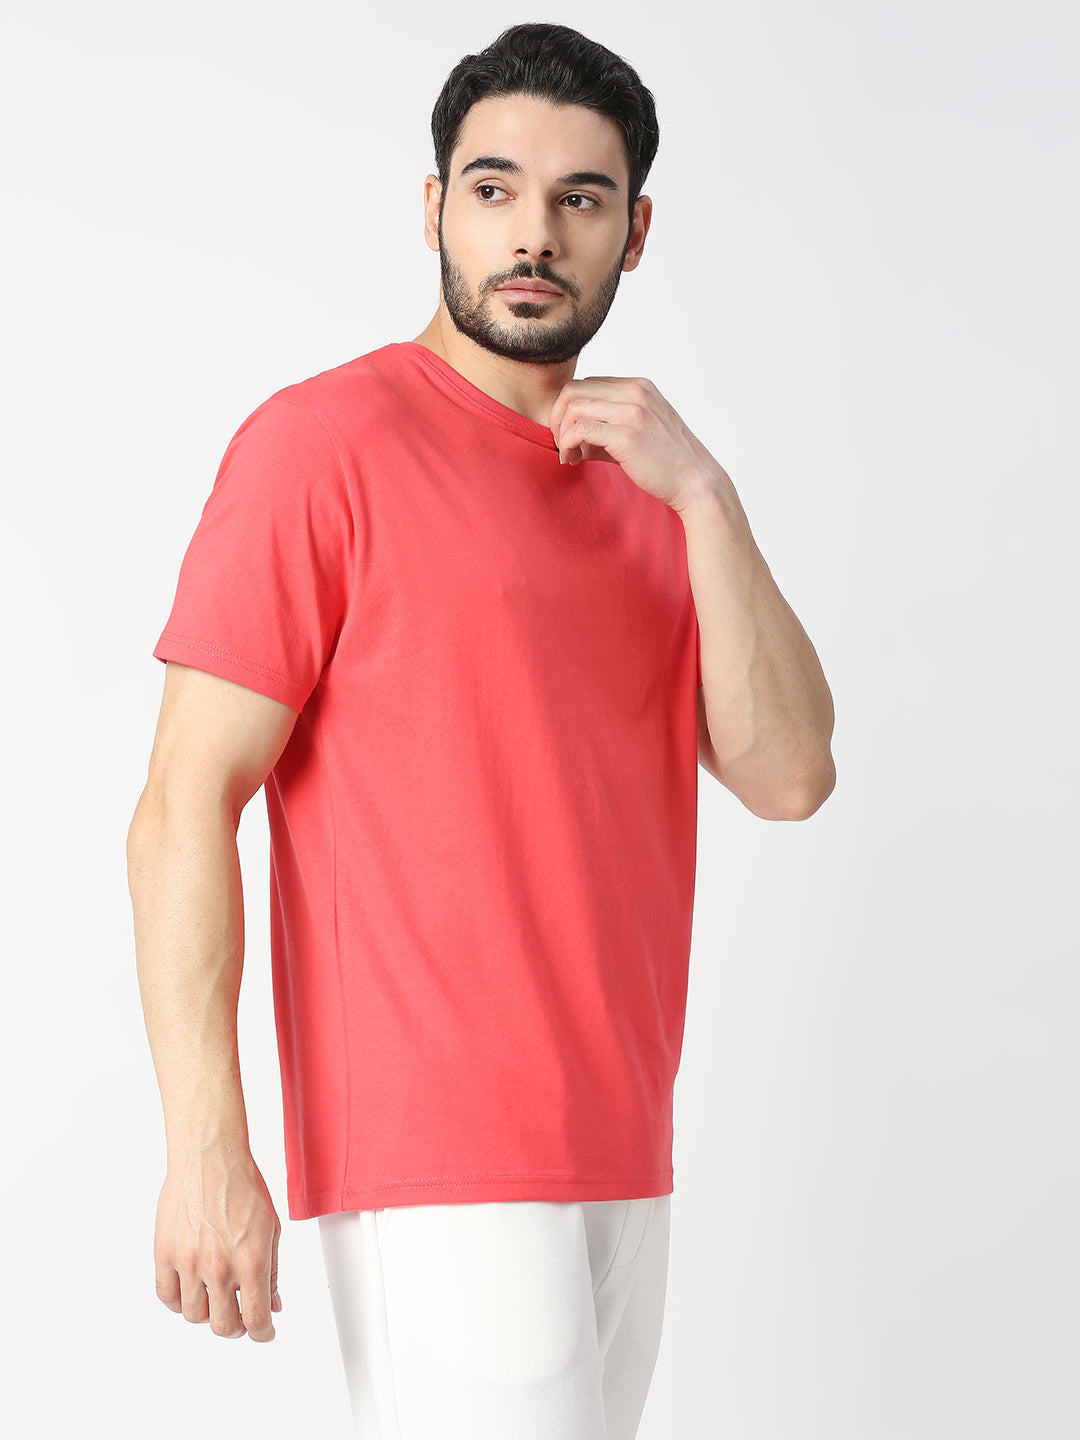 Buy Blamblack Solid Cherry Red Half Sleeved T-shirt